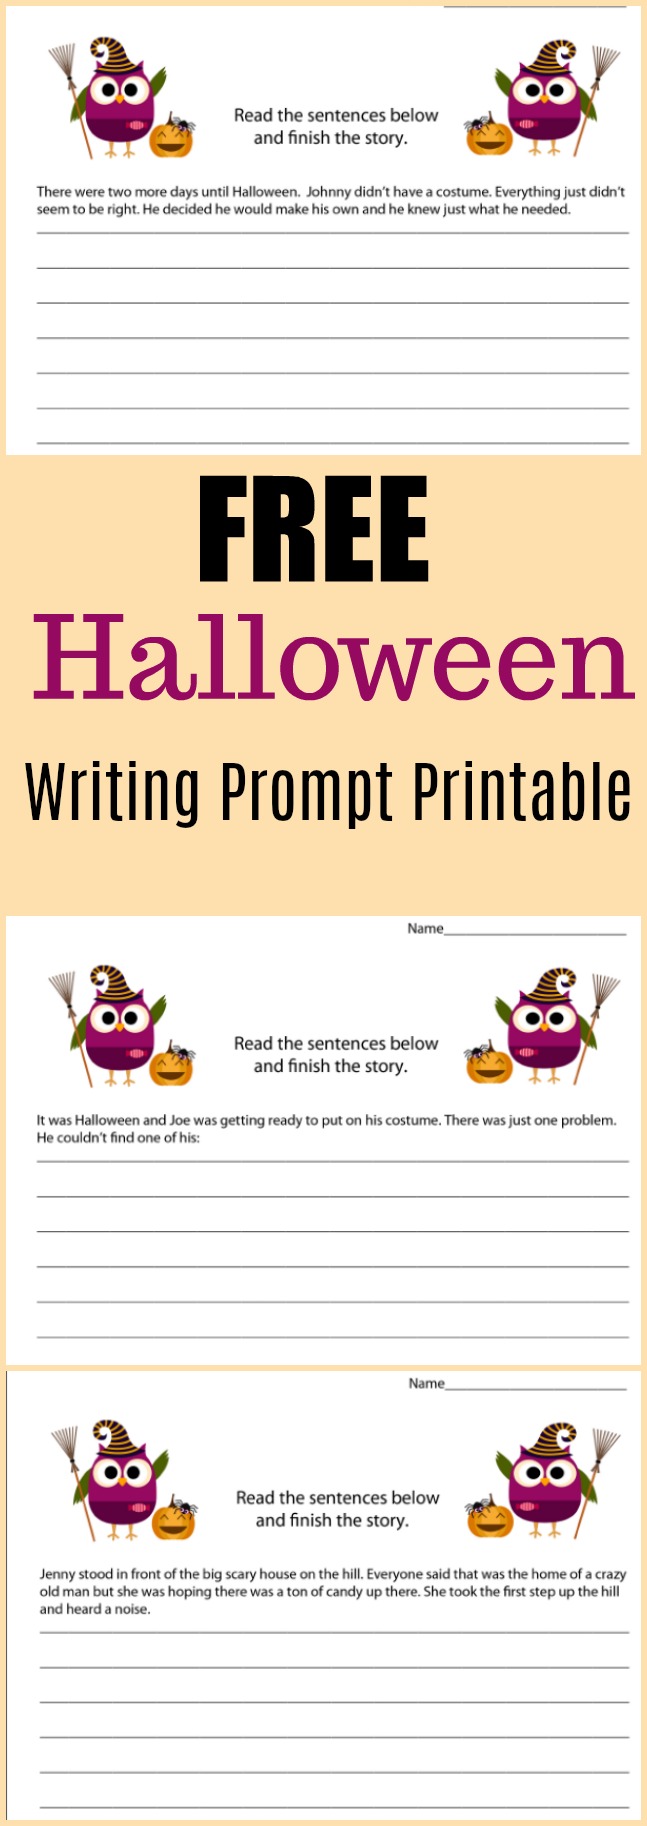 Free Halloween Writing Prompt Printable - #writing #writingprompt #holiday #printable #freeprintable #education #edchat #homeschool #homeschooling #halloween